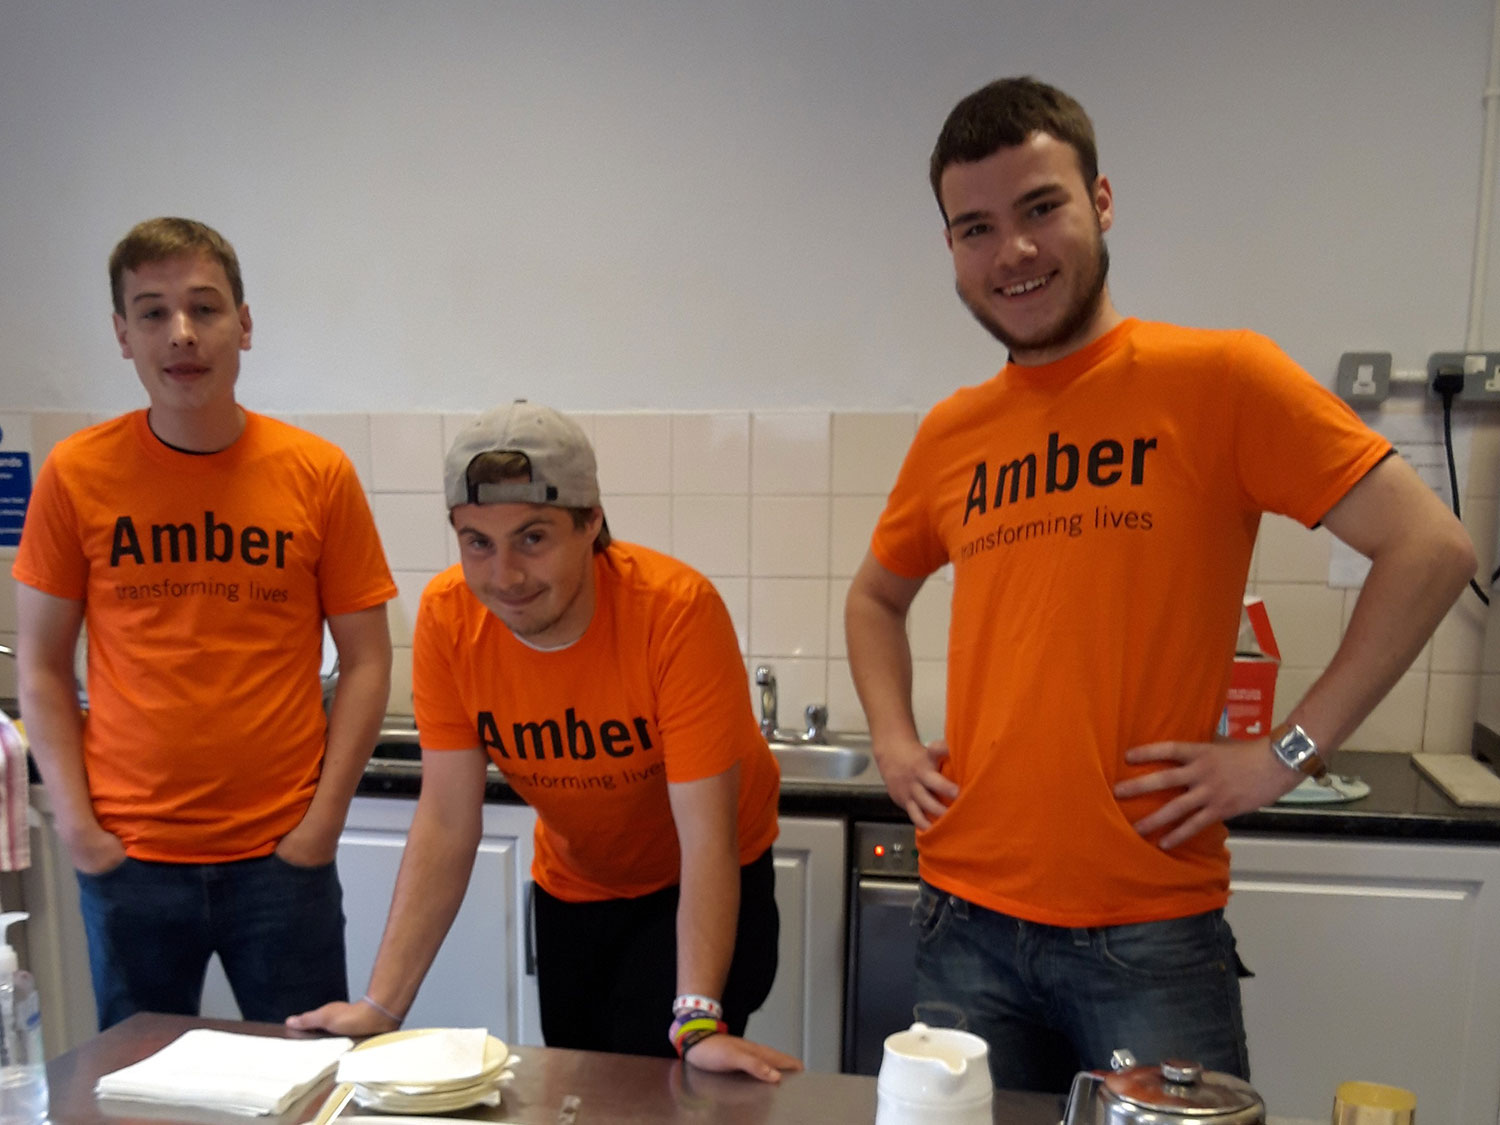 Three young adults wearing orange Amber Foundation t-shirts